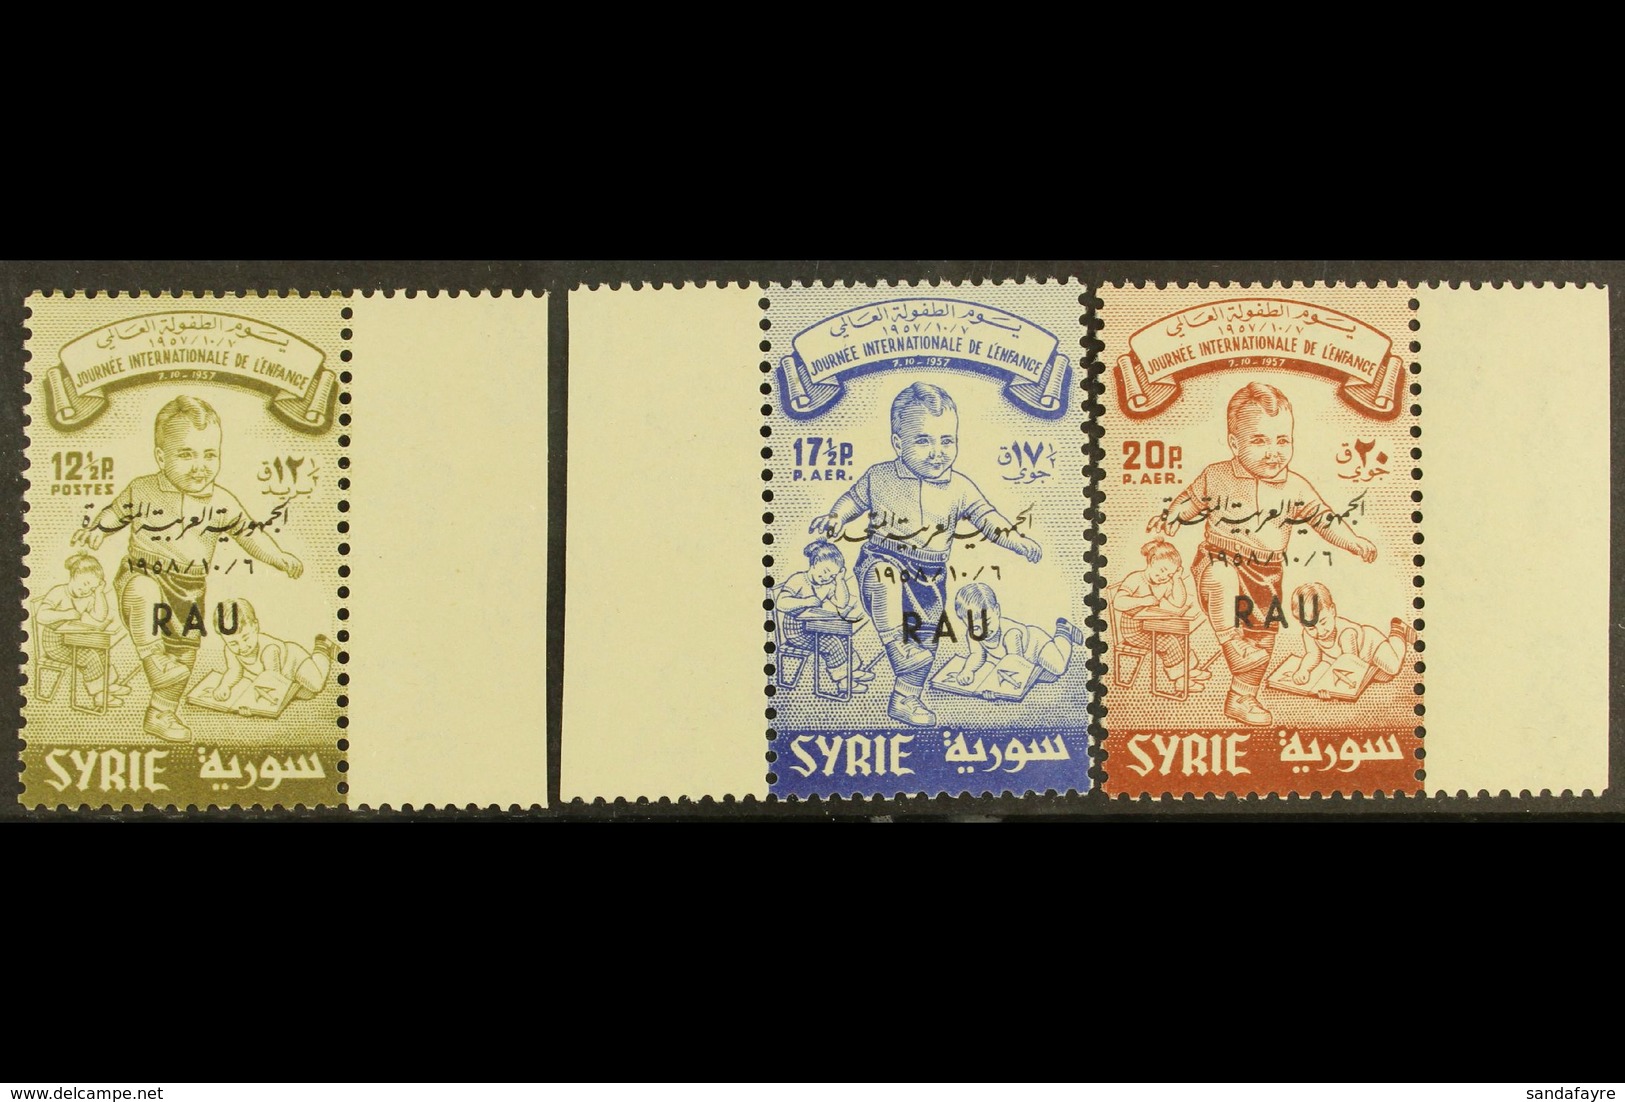 1958 International Children's Day "RAU" Overprints Complete Set, SG 670a/70c, Fine Never Hinged Mint Marginal Examples,  - Siria